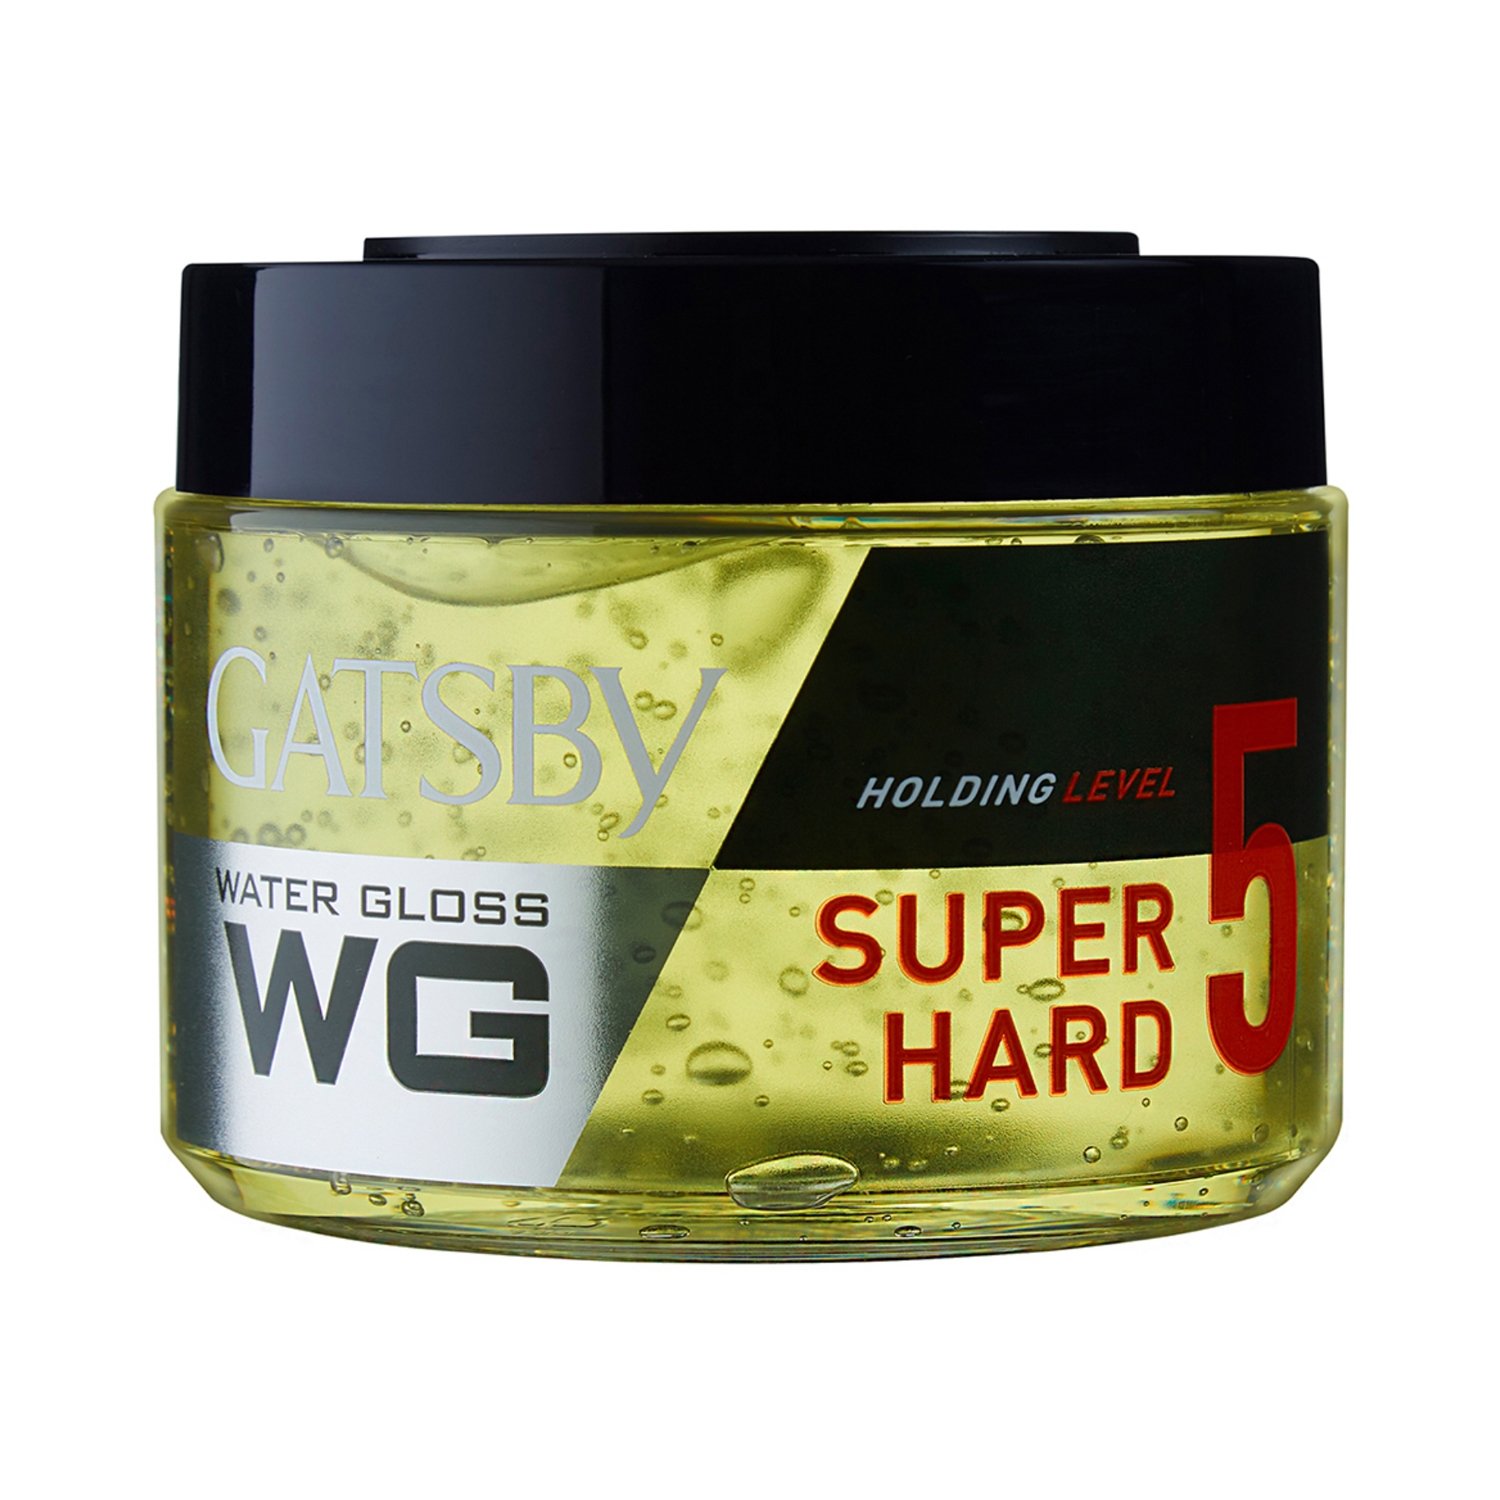 Gatsby Water Gloss Super Hard Gel (300g)